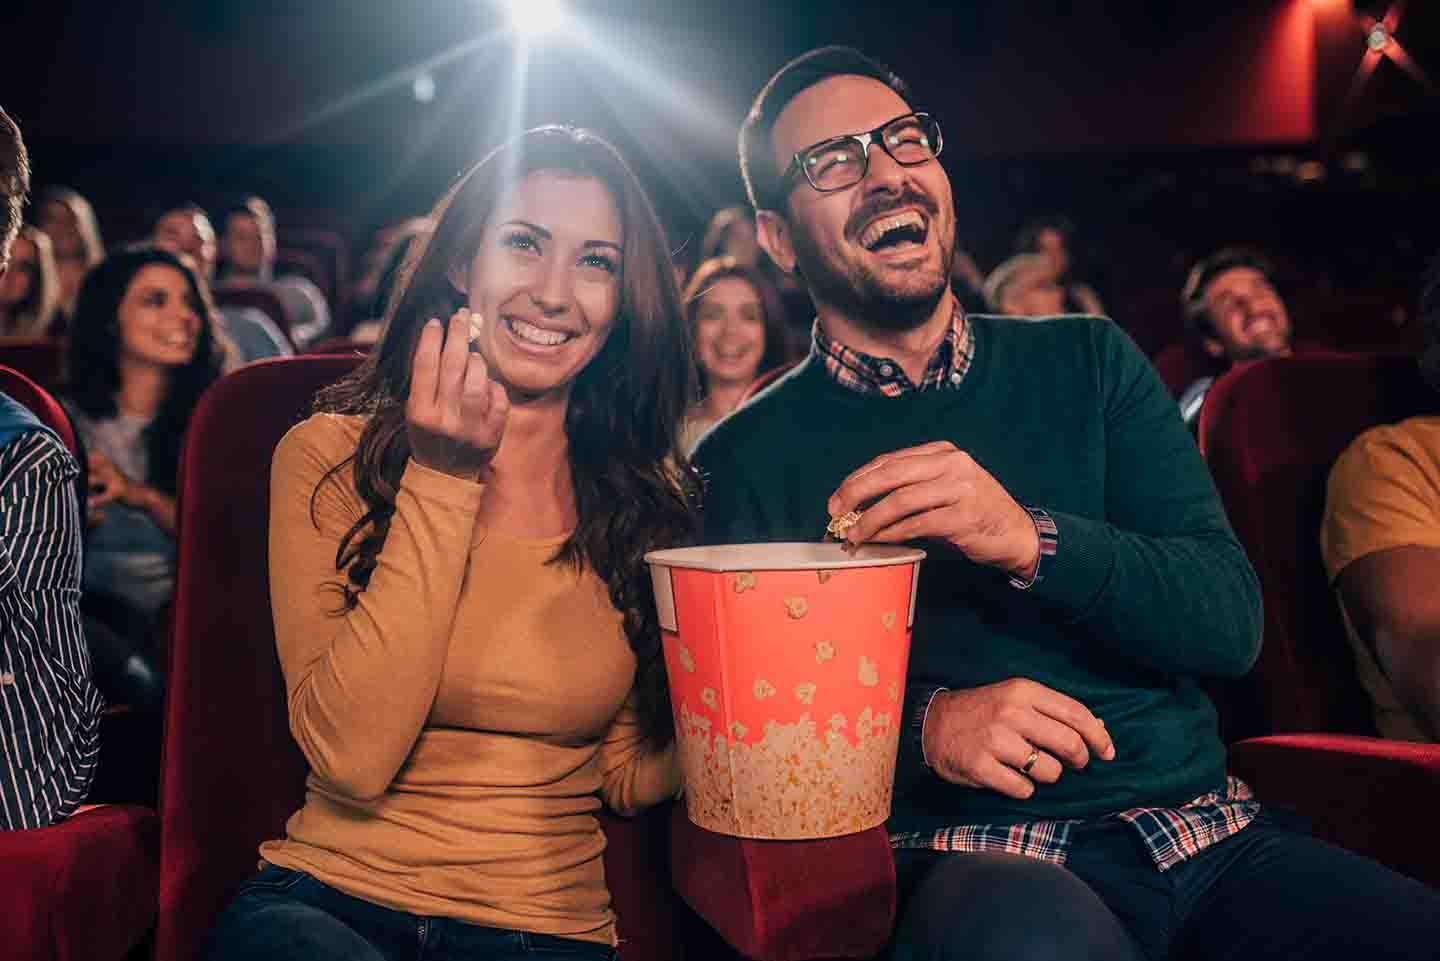 Couple enjoying a movie screening together